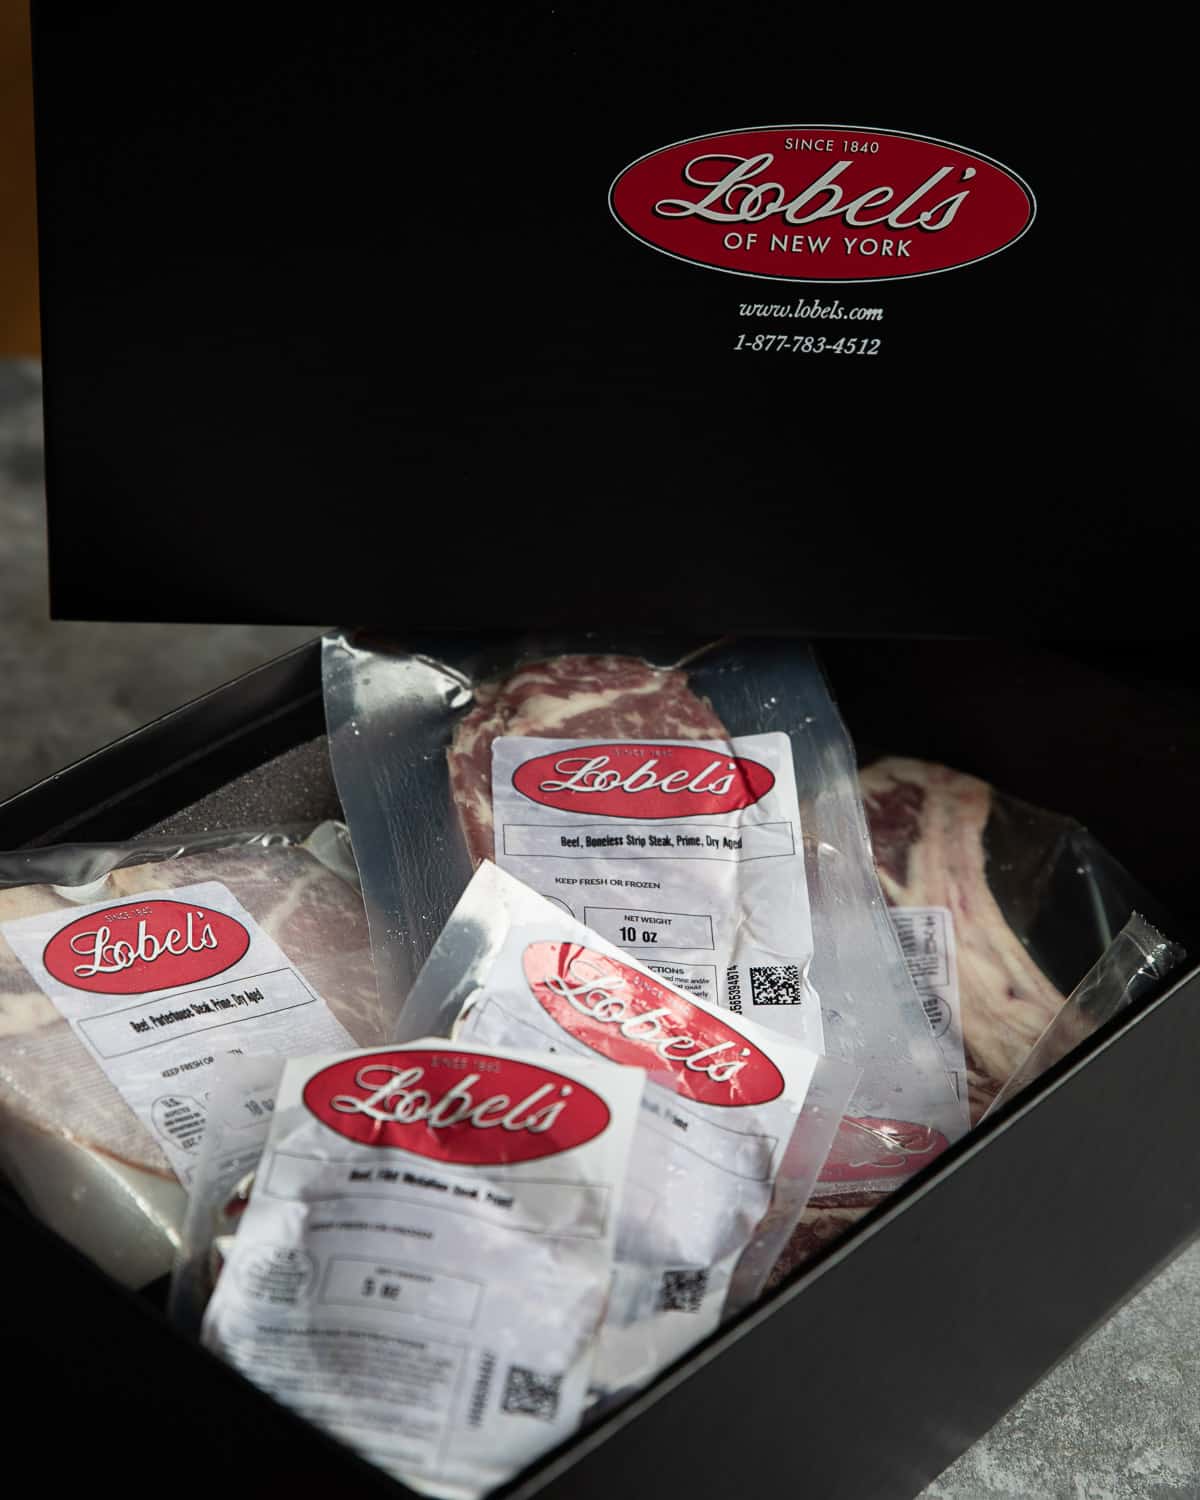 A box of steak sent by Lobel's